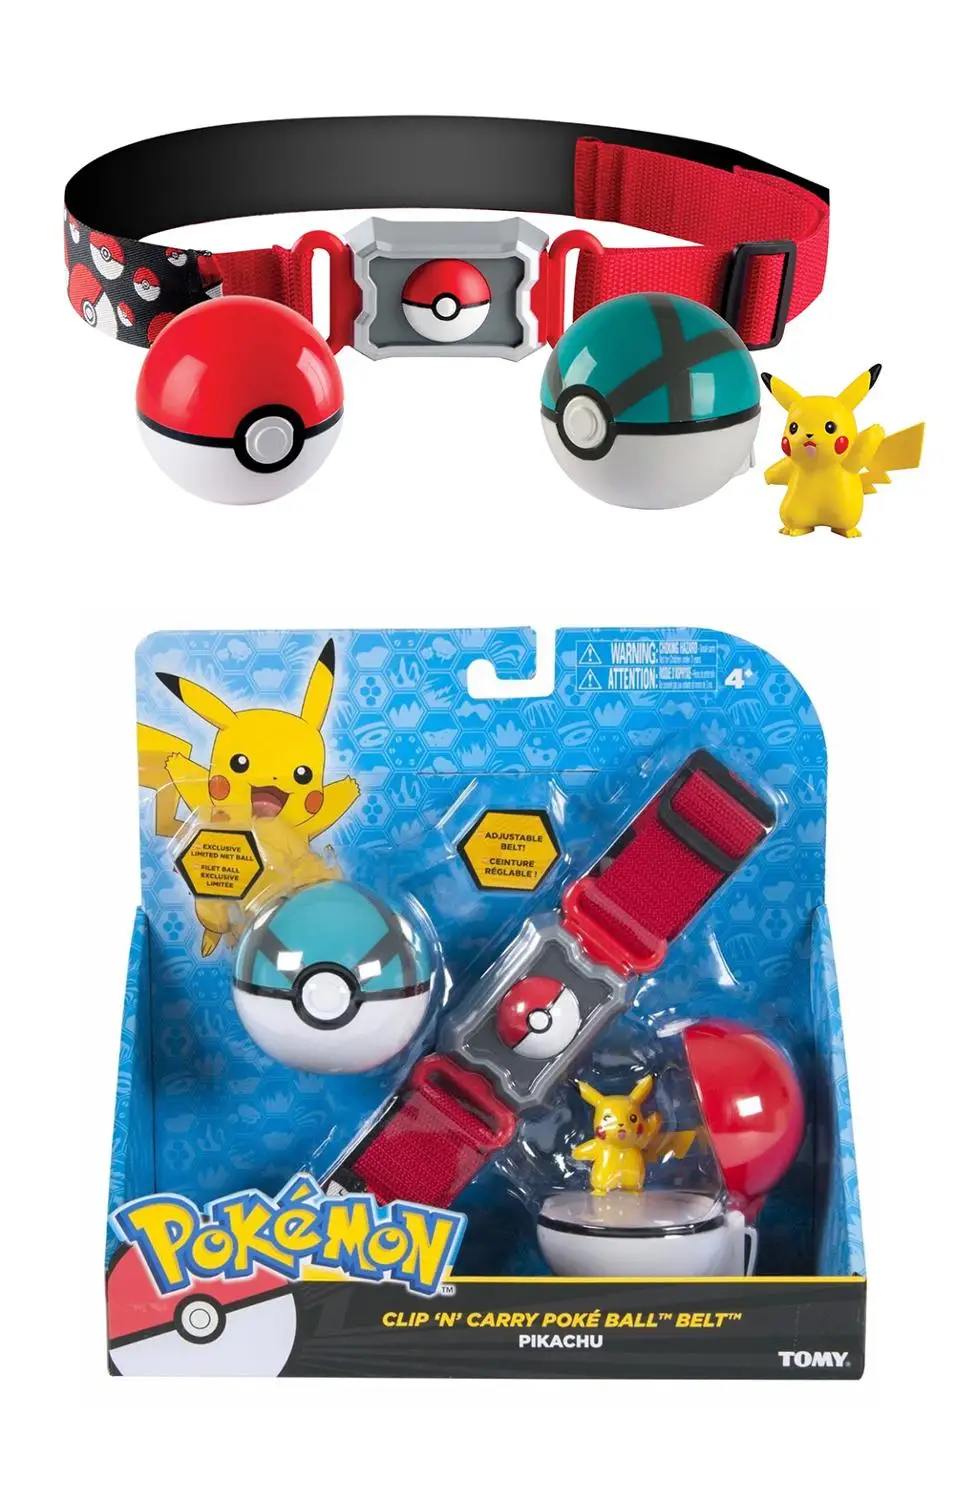 Pokemon ball игрушки Pokeball с поясом фигурка модель игрушки Pokemones фигурки Выдвижной Пояс подарки для детей Детские игрушки - Цвет: Set 1 with box